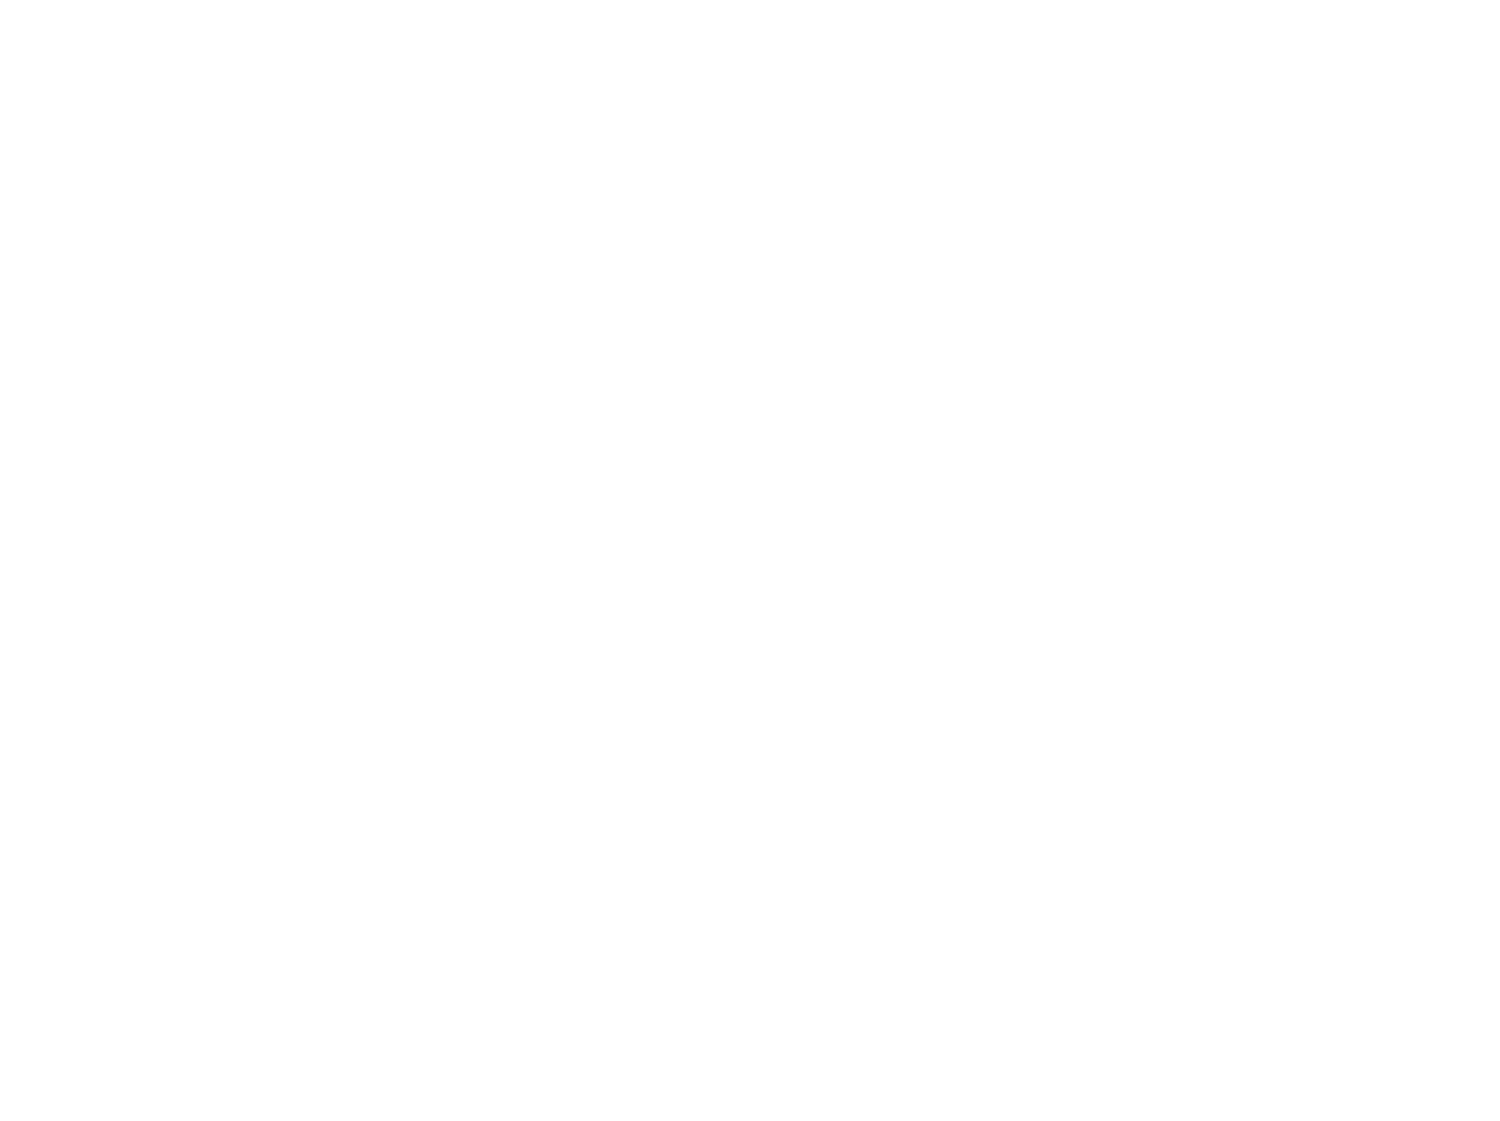 Land Resilience Partnership